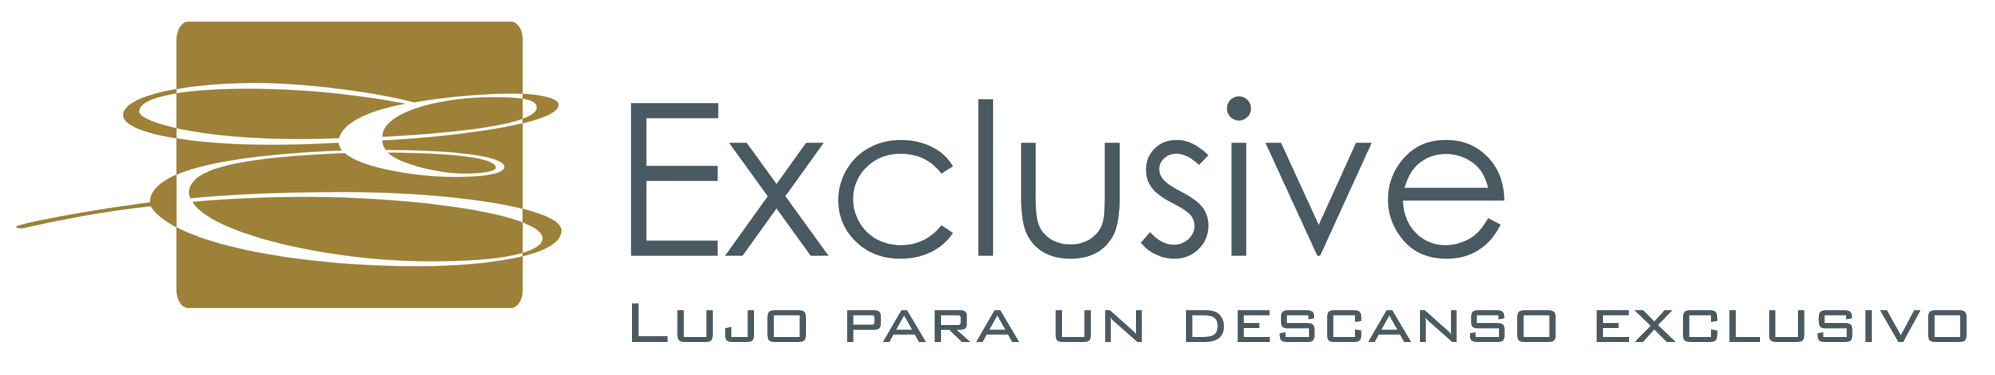 logo-exclusive-flex.jpg